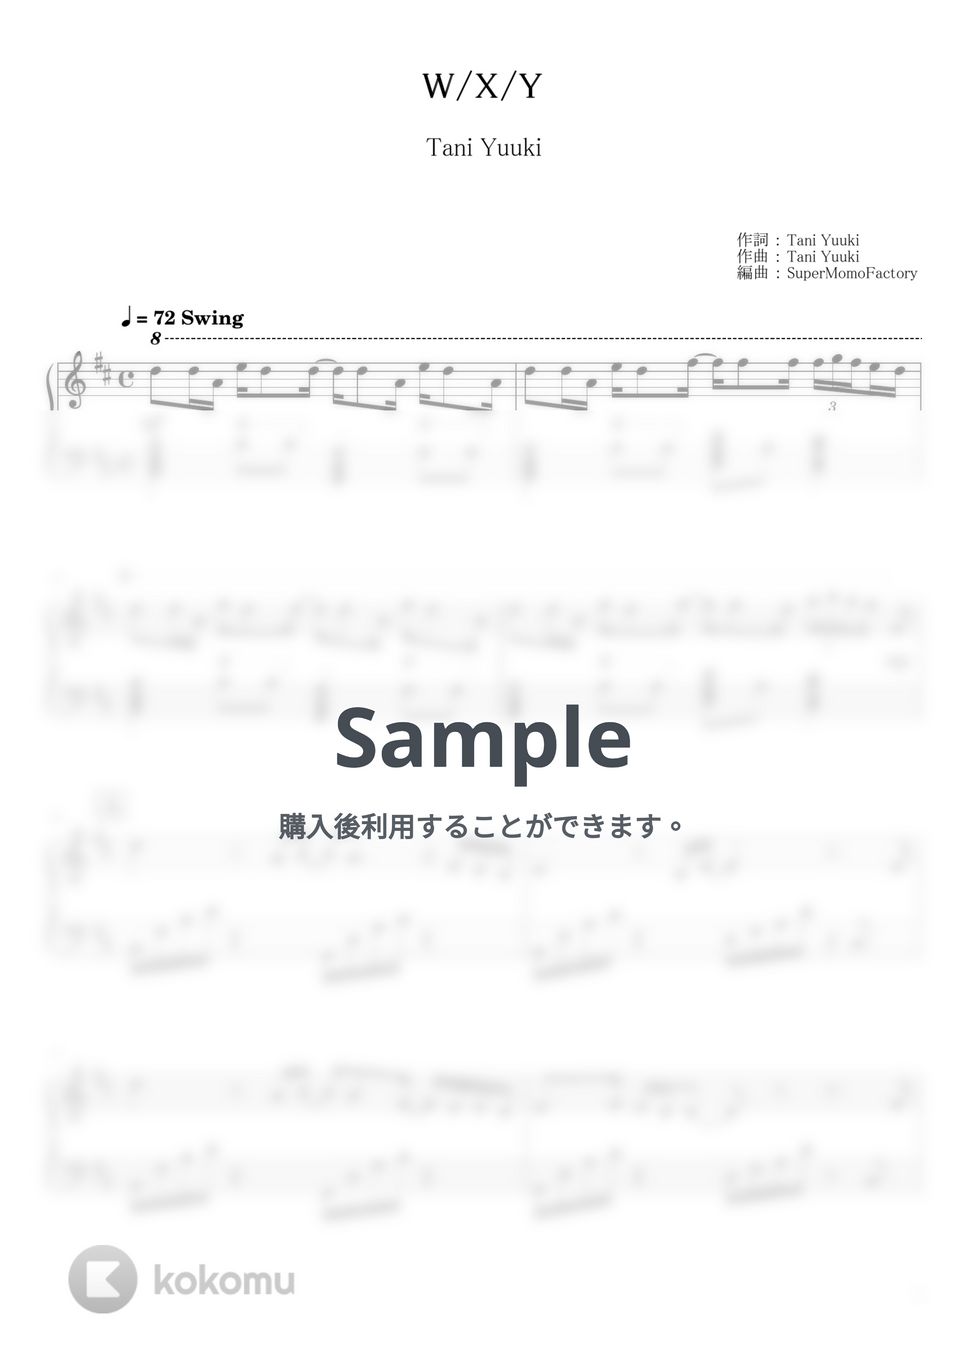 Tani Yuuki - W/X/Y (ピアノソロ / 中級) by SuperMomoFactory